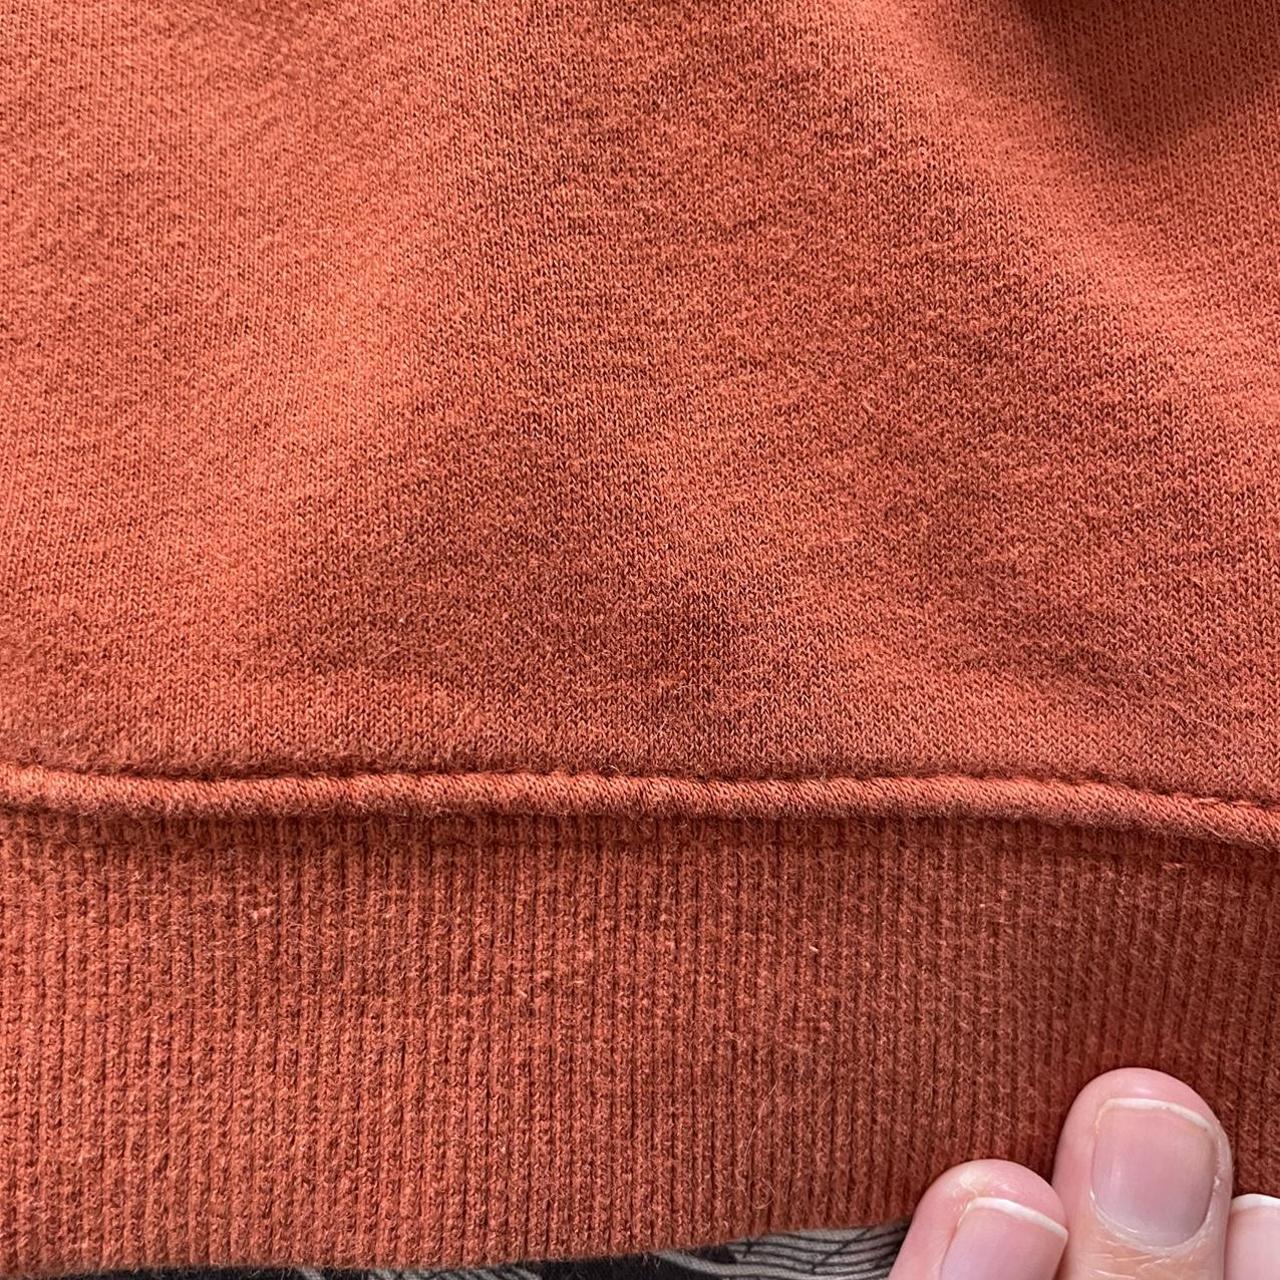 Gymboree Orange Sweatshirt (2)